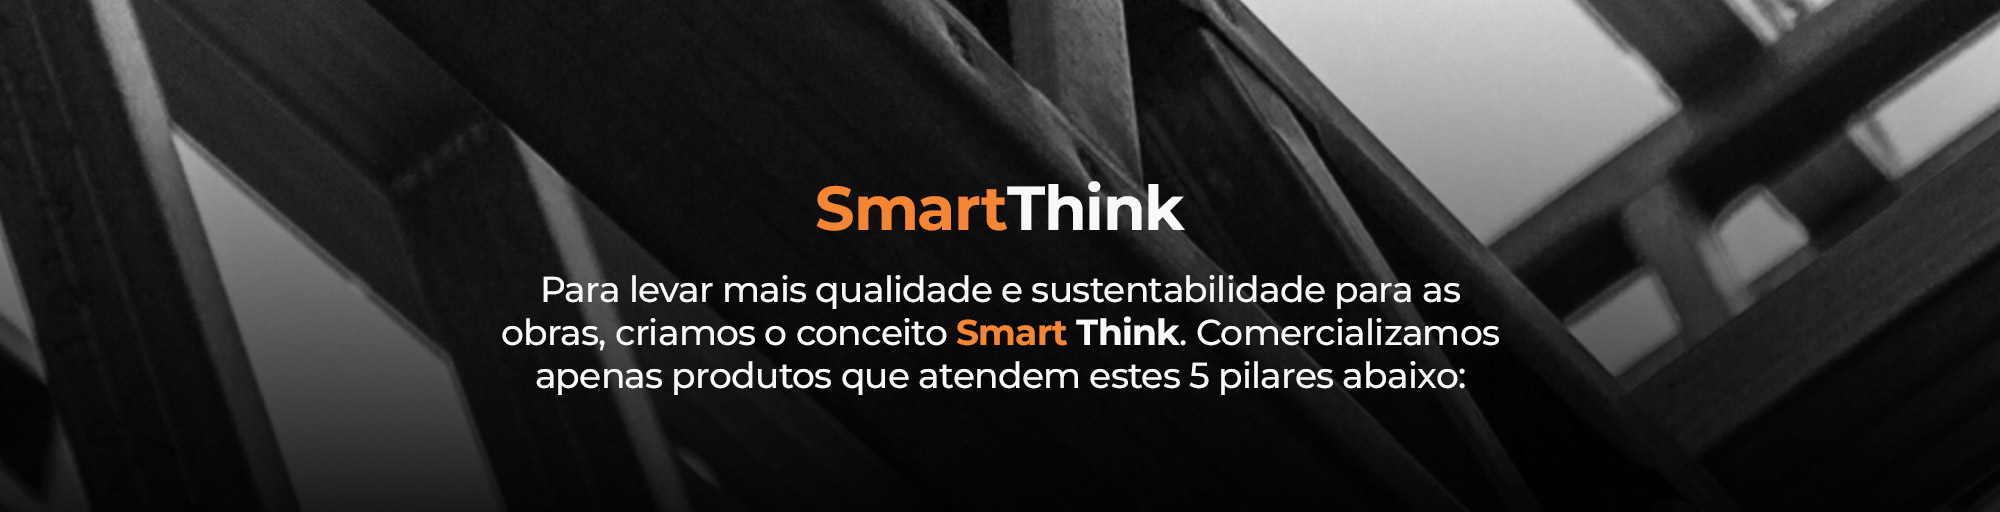 SmartThink